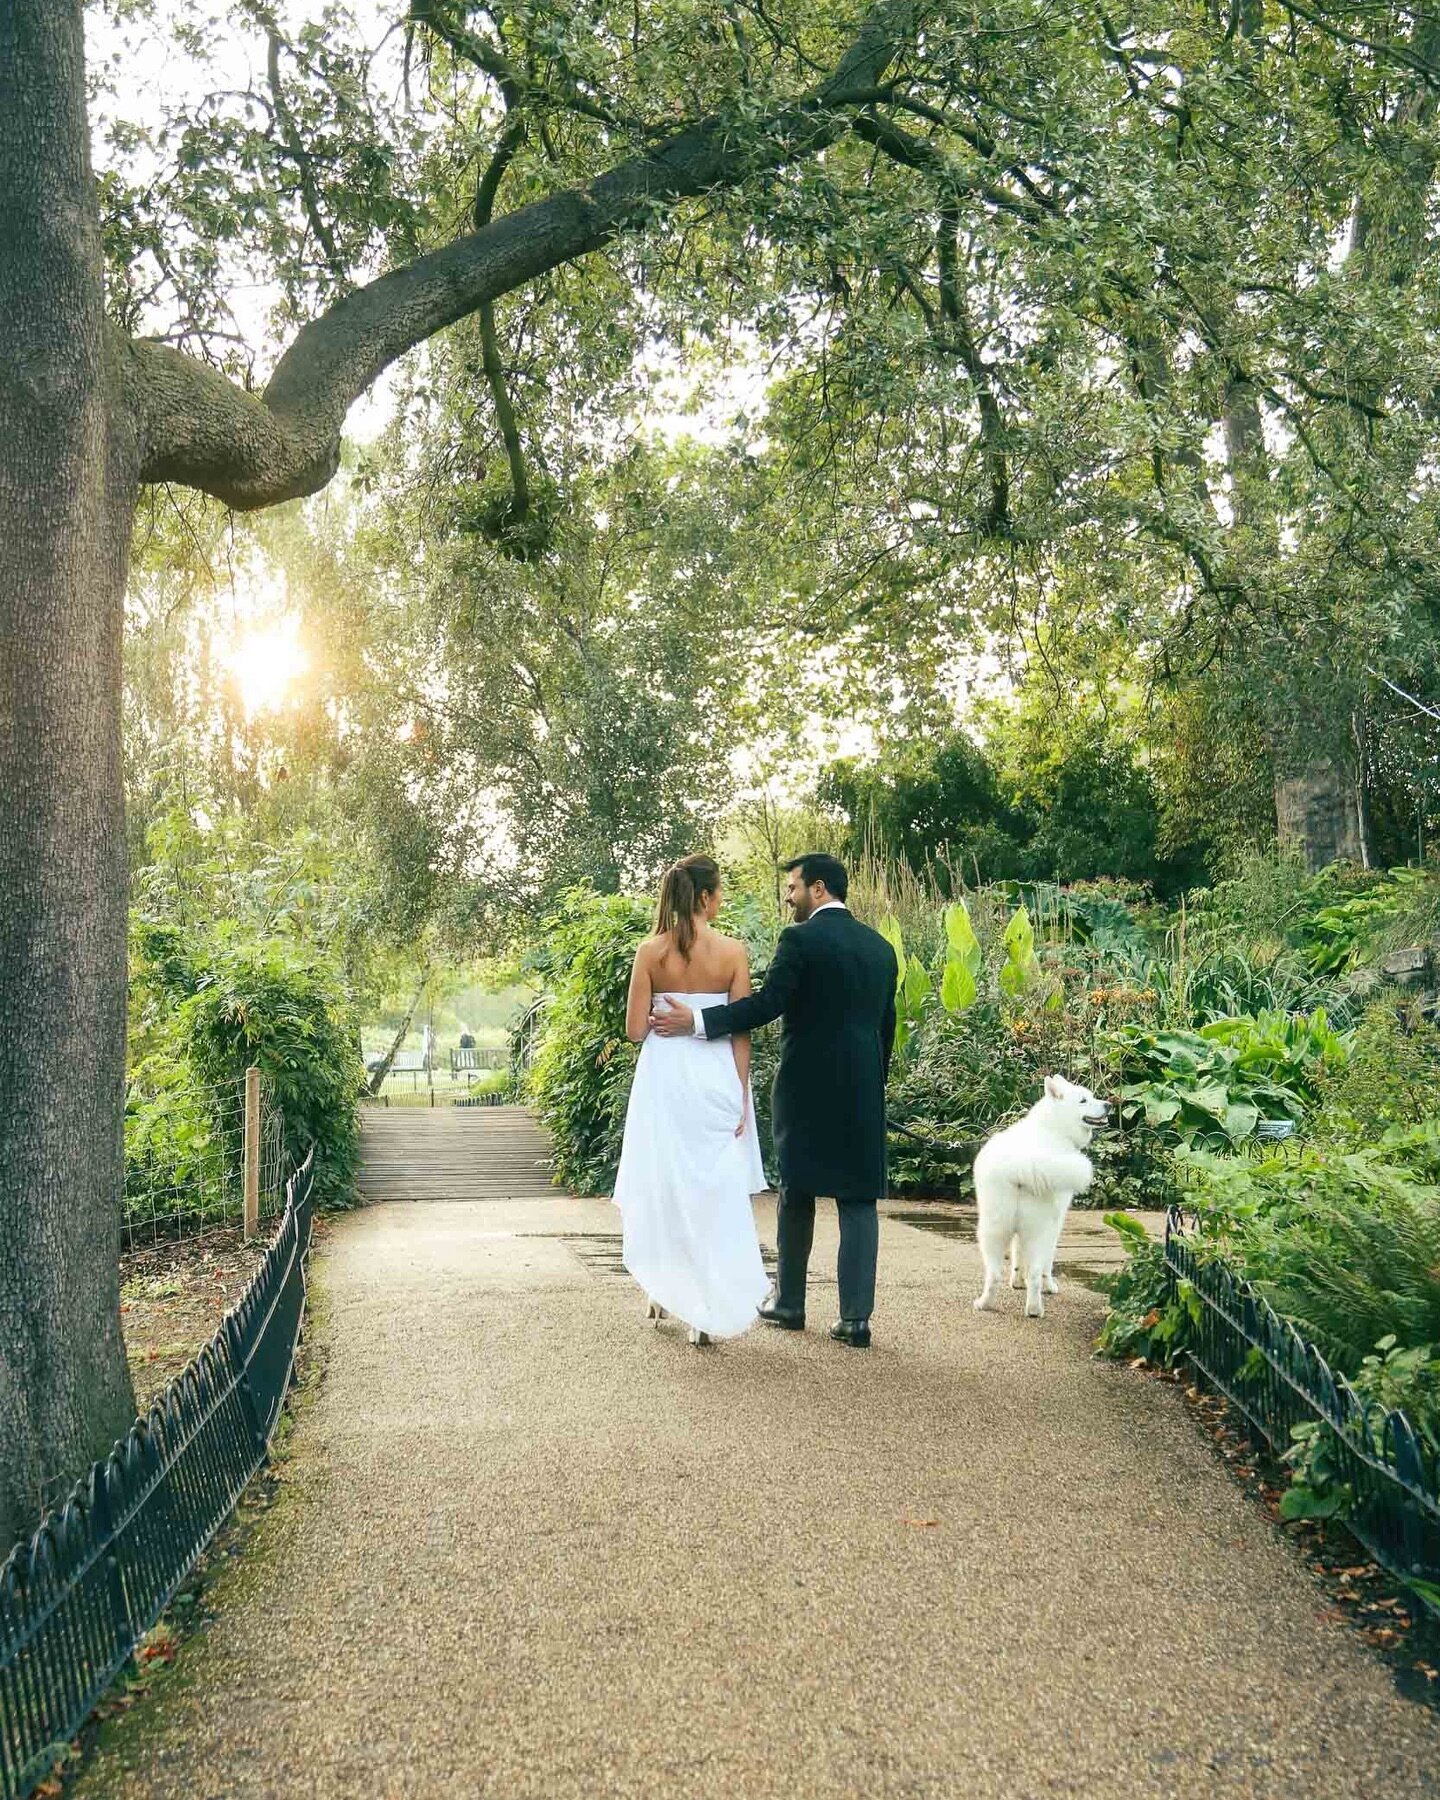 A Regent&rsquo;s Park moment with Simona, Ivan and their gorgeous Husky/Samoyed cross Leon 🖤
.
.
.
#regentsparkwedding #parkwedding #londonweddingphotographer #londonweddingphotography #coupleph #weddinginspiration #weddingdog #weddinghusky #huskies